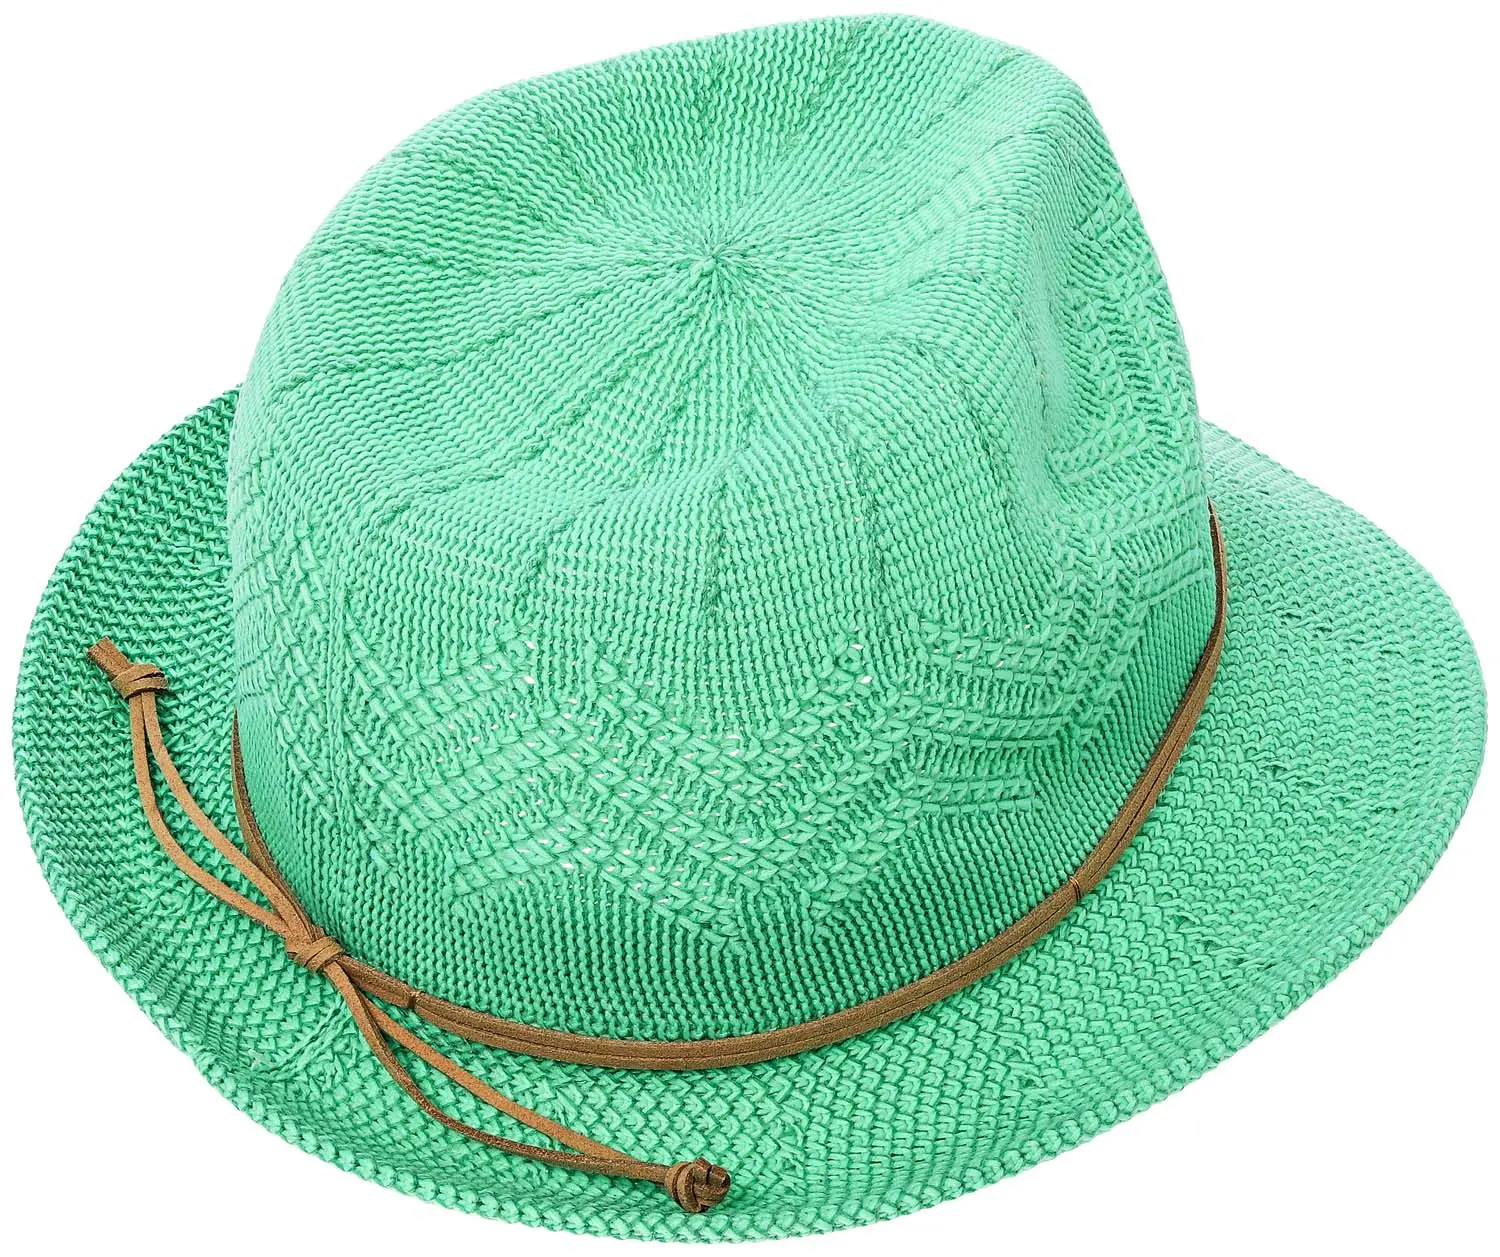 Sombrero - Turquoise Island